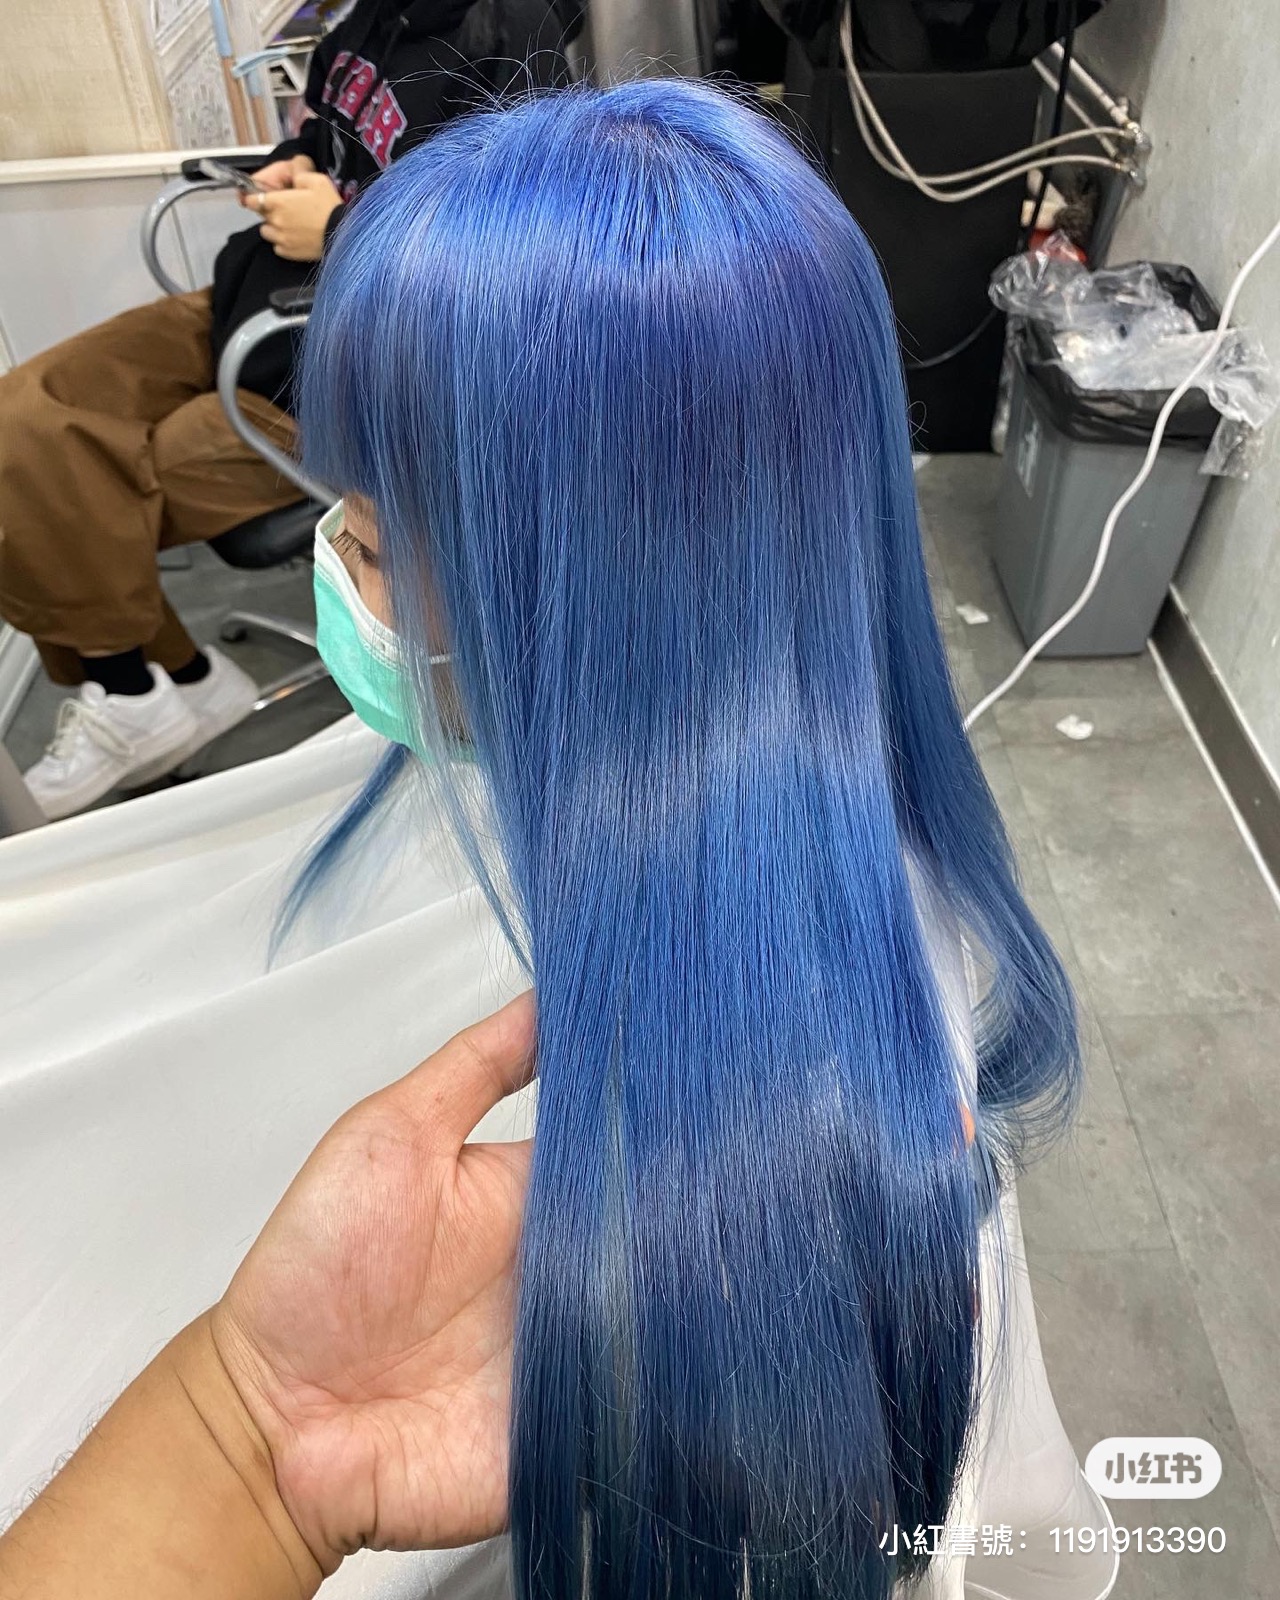 Zen pure hair髮型作品: 藍